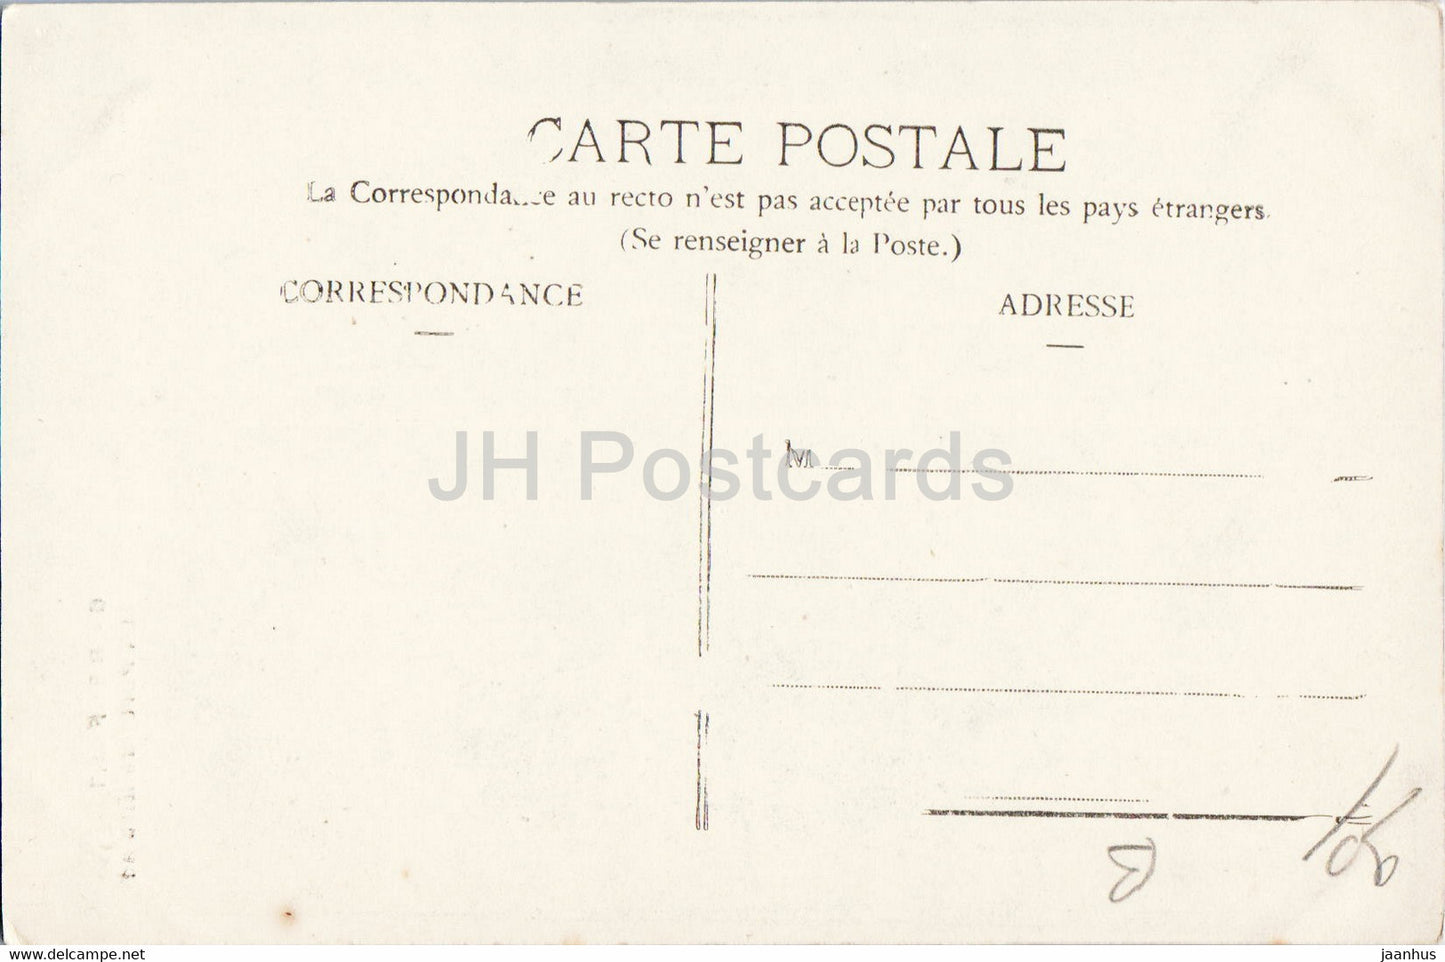 Belfort - La Porte de Briasch - 6 - carte postale ancienne - France - inutilisée